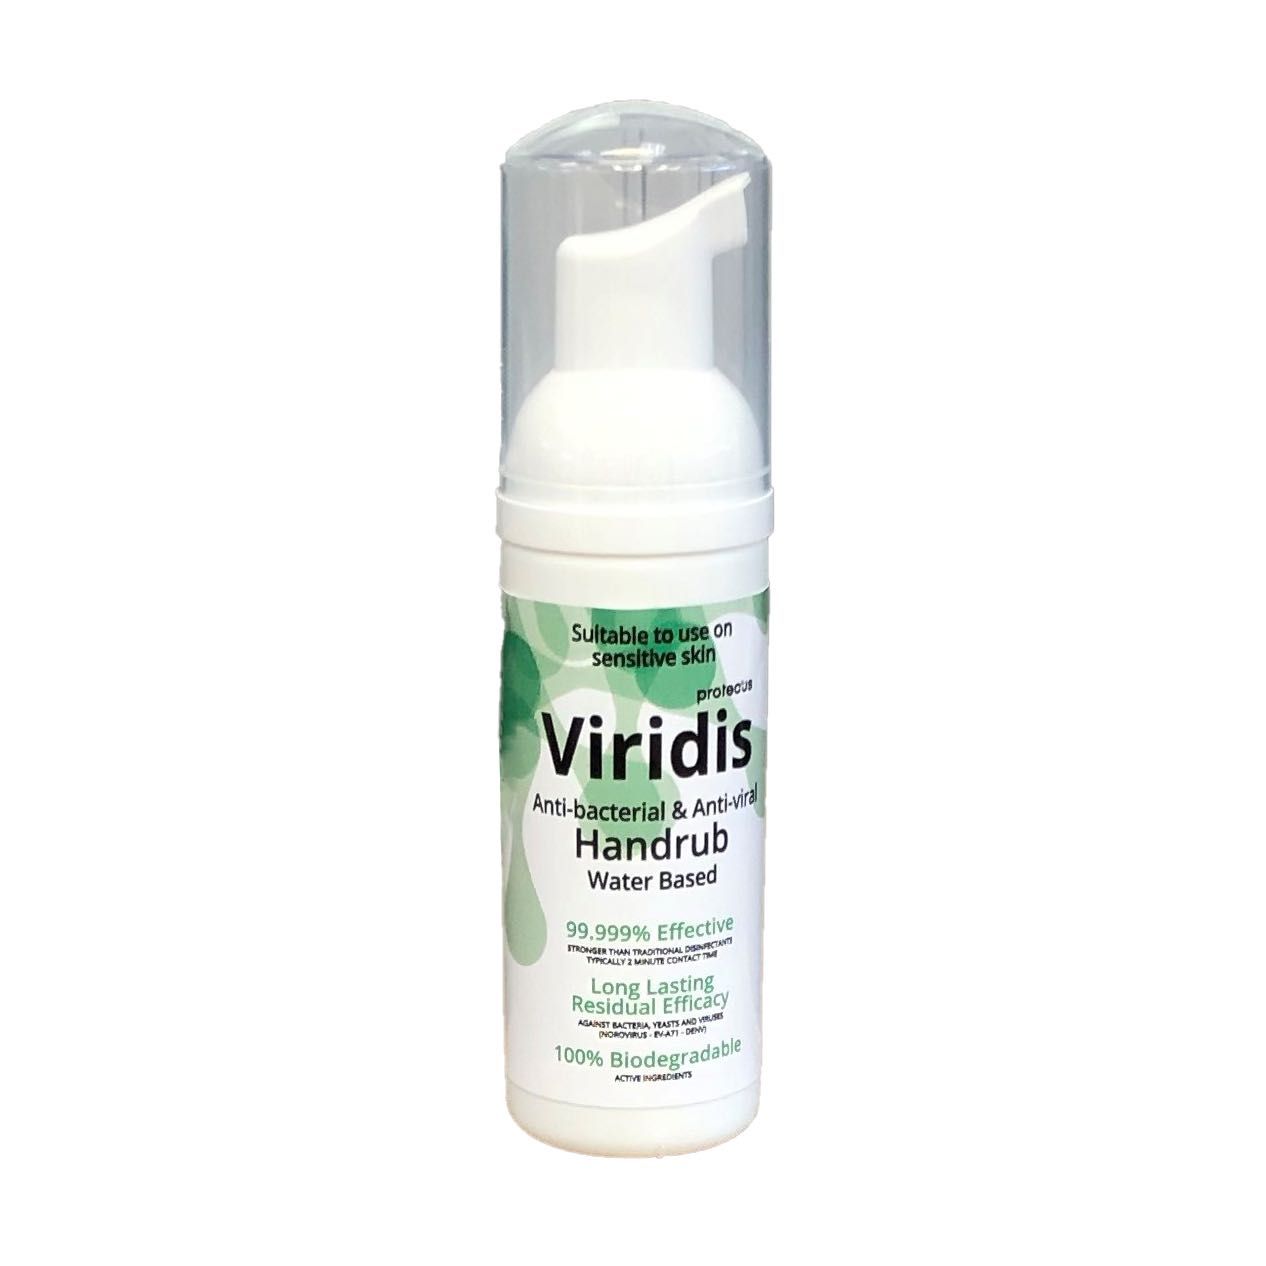 Protectus Viridis BIO - Dezinfectant spuma pt mâini si suprafețe